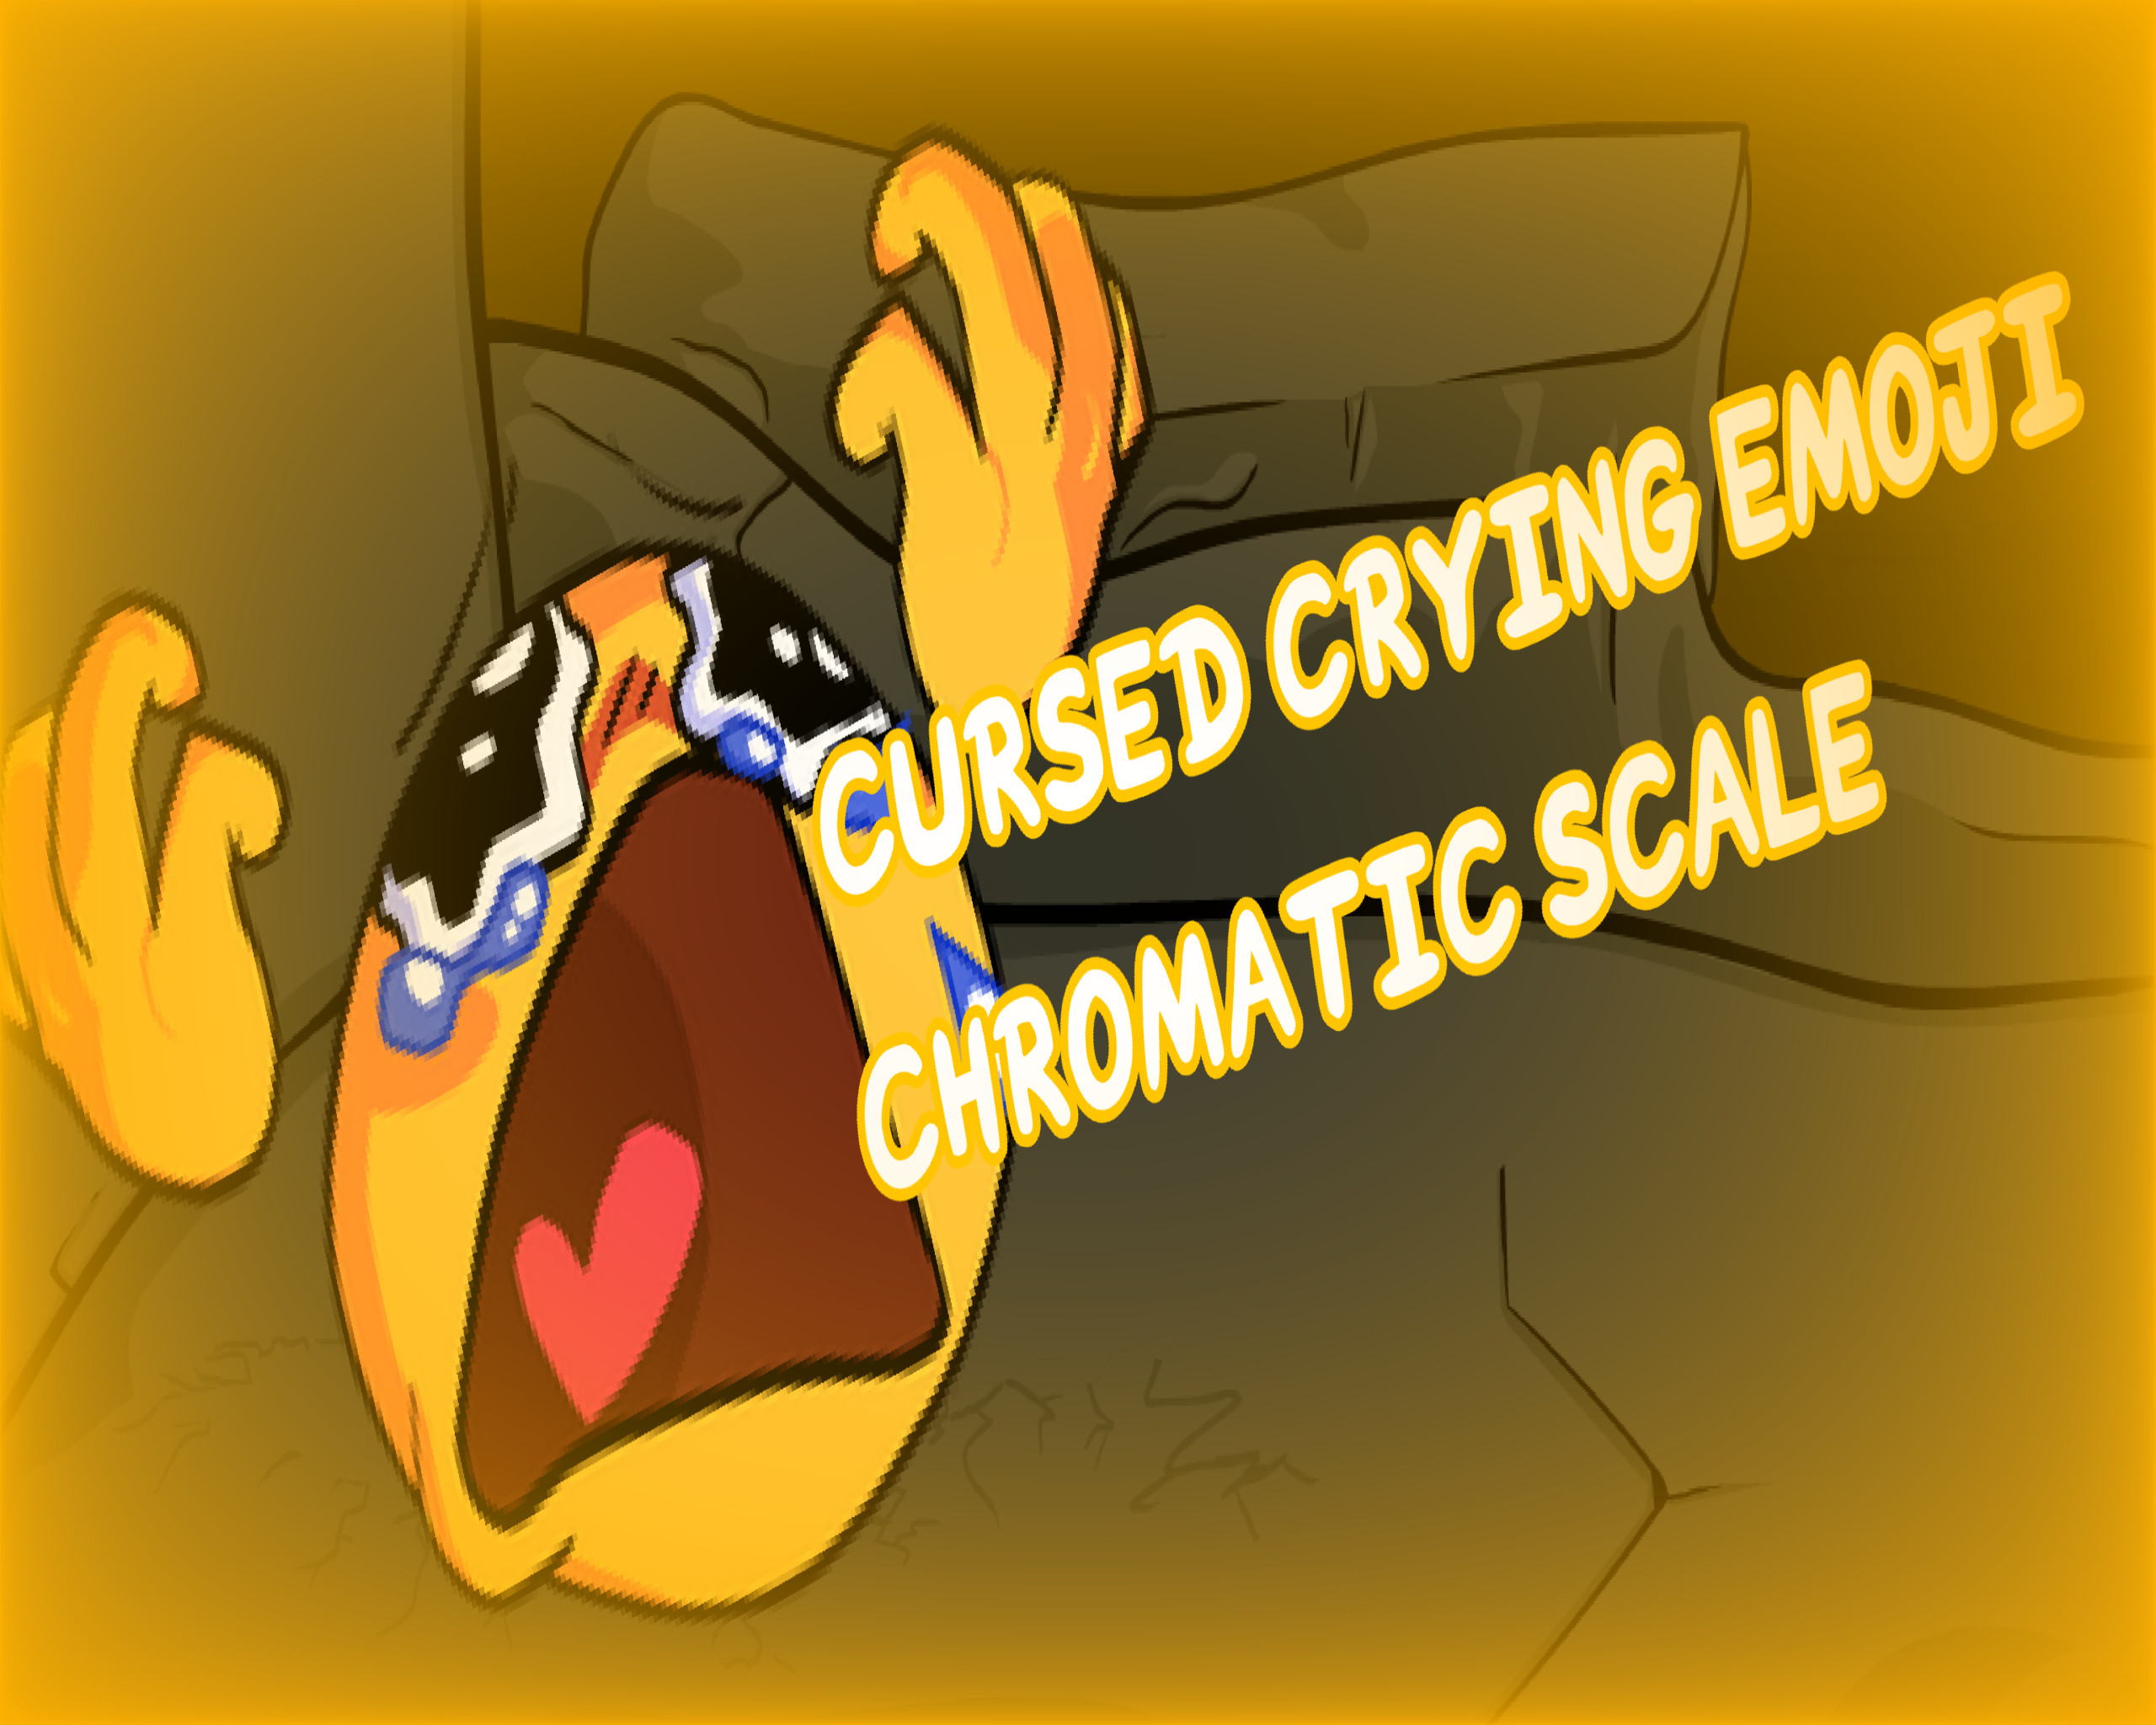 cursed crying emoji chromatic scale (so cool) [Friday Night Funkin